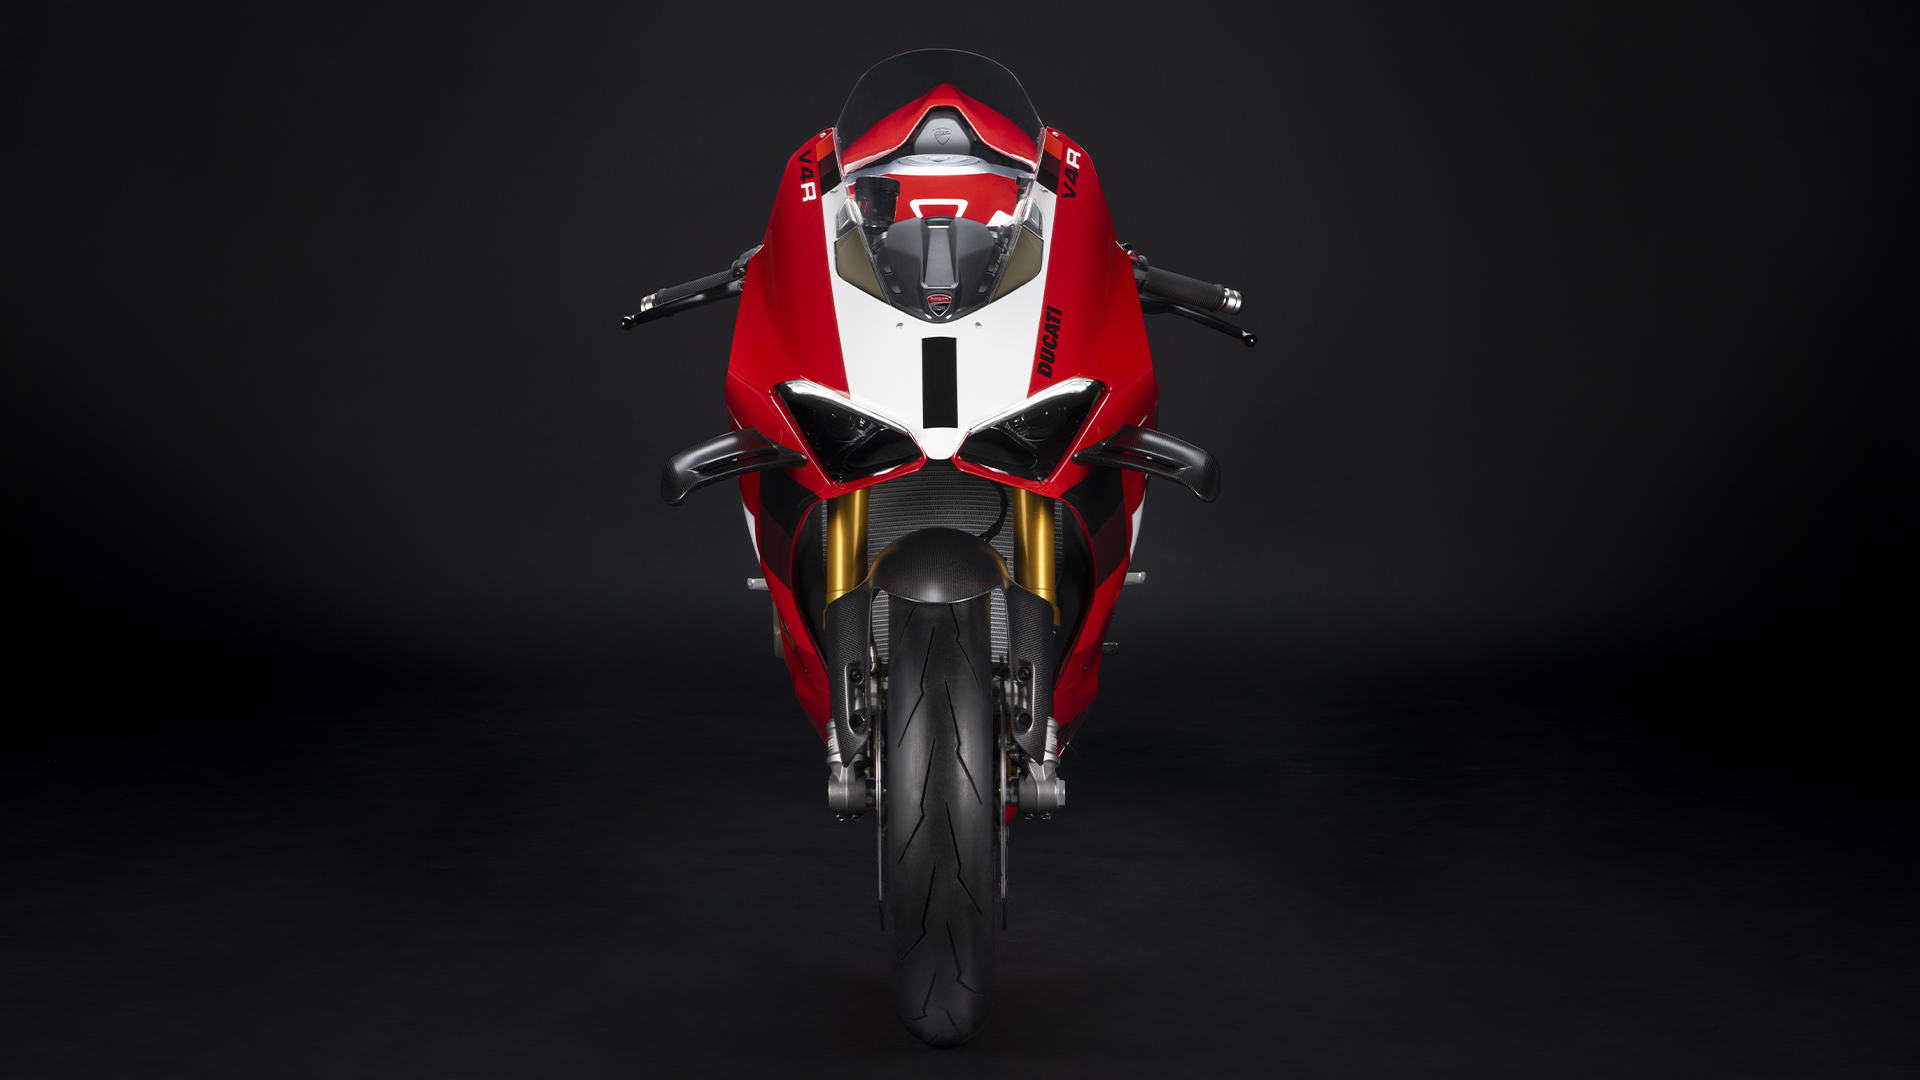 Ducati-Panigale-V4R-MY23-tech-specs-gallery-08-1920x1080